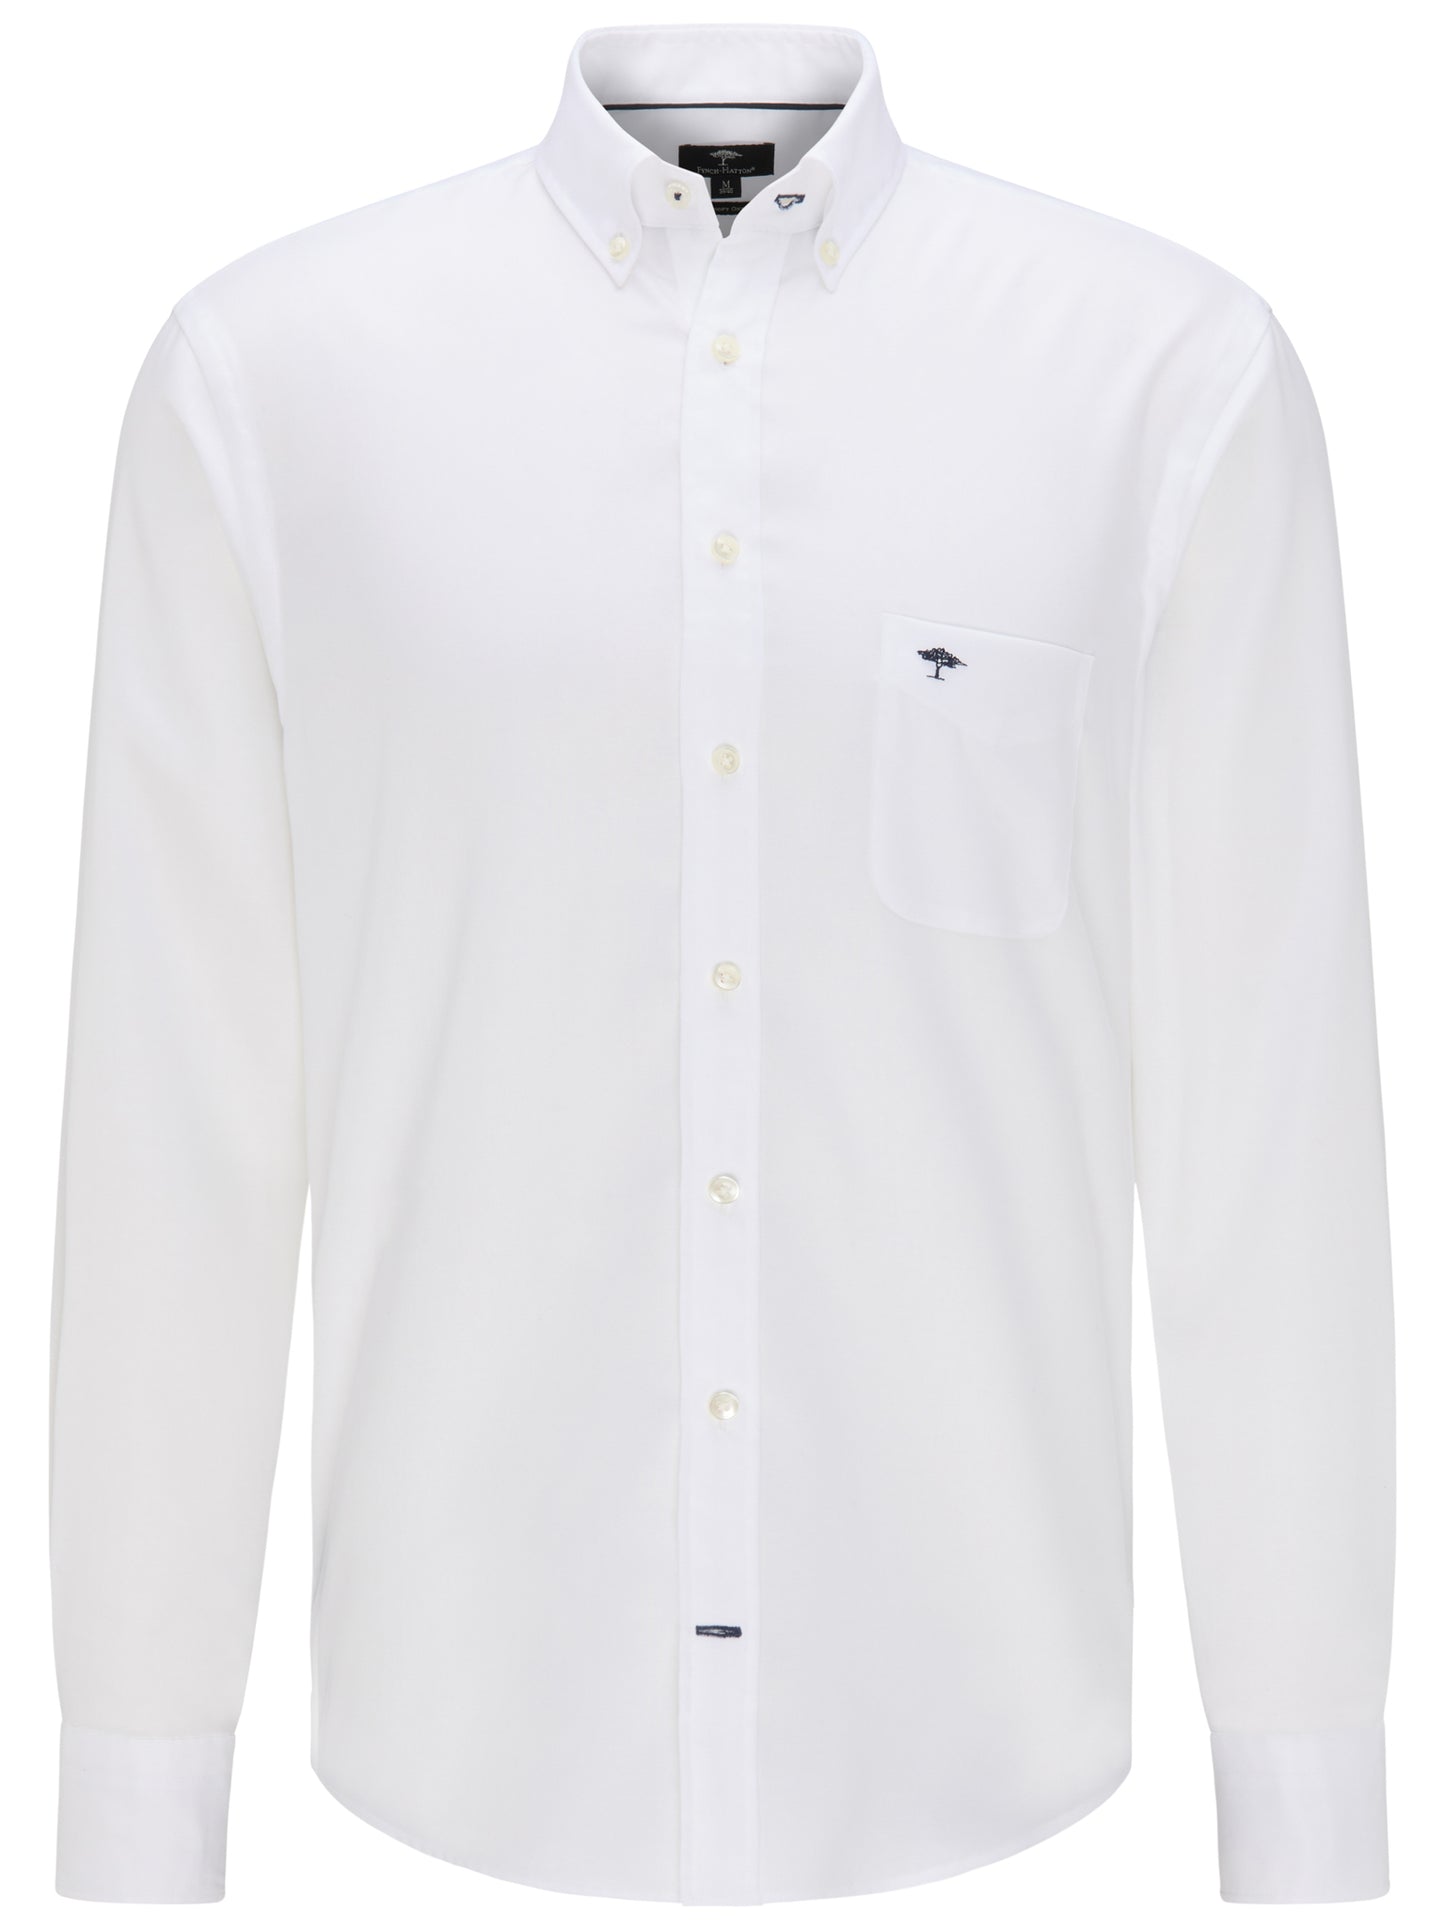 Fynch-Hatton All Season Casual Fit Button Down Oxford White Shirt